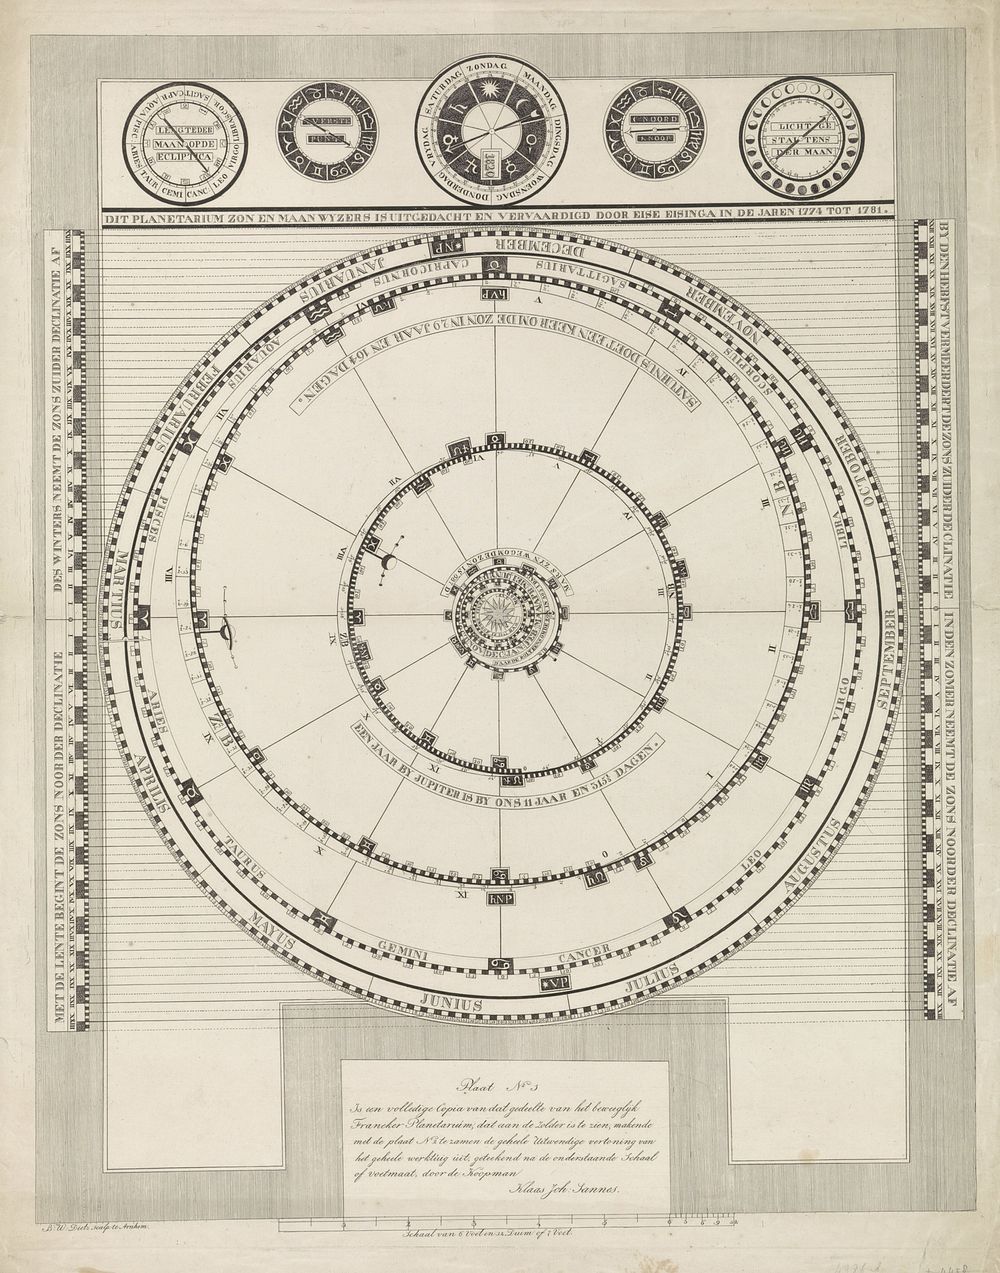 Plan van bewegelijk planetarium van Eise Eisinga te Franeker (1824) by Barentie Willem Dietz and Klaas Joh Sannes